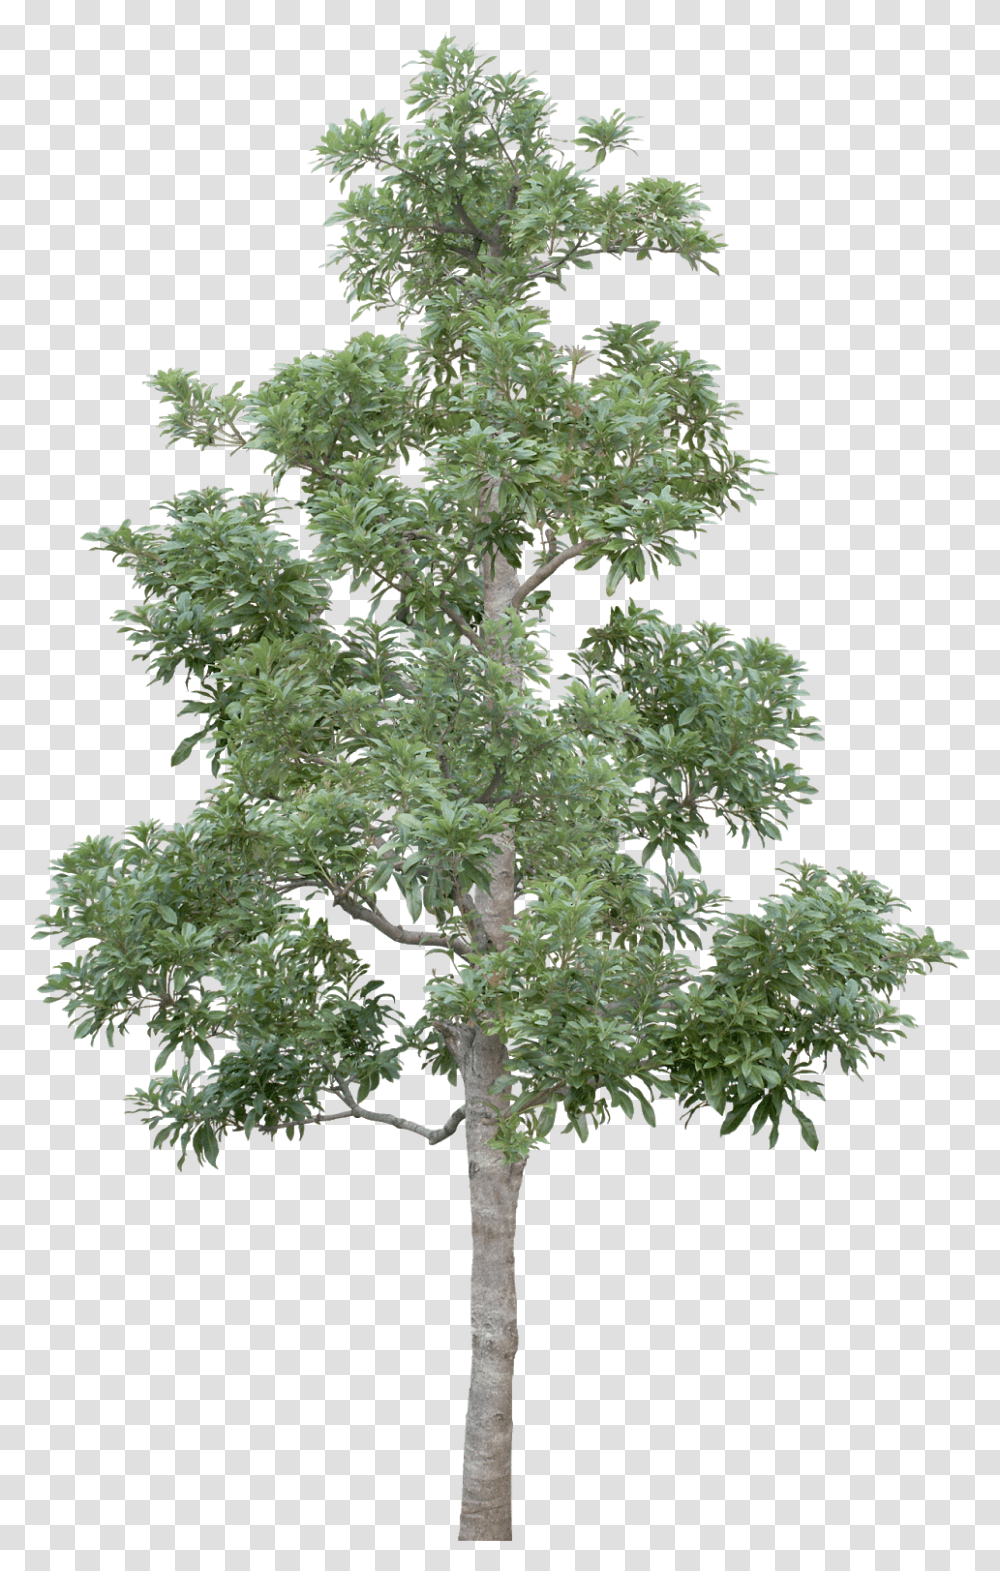 Tree Limb Tree, Plant, Potted Plant, Vase, Jar Transparent Png